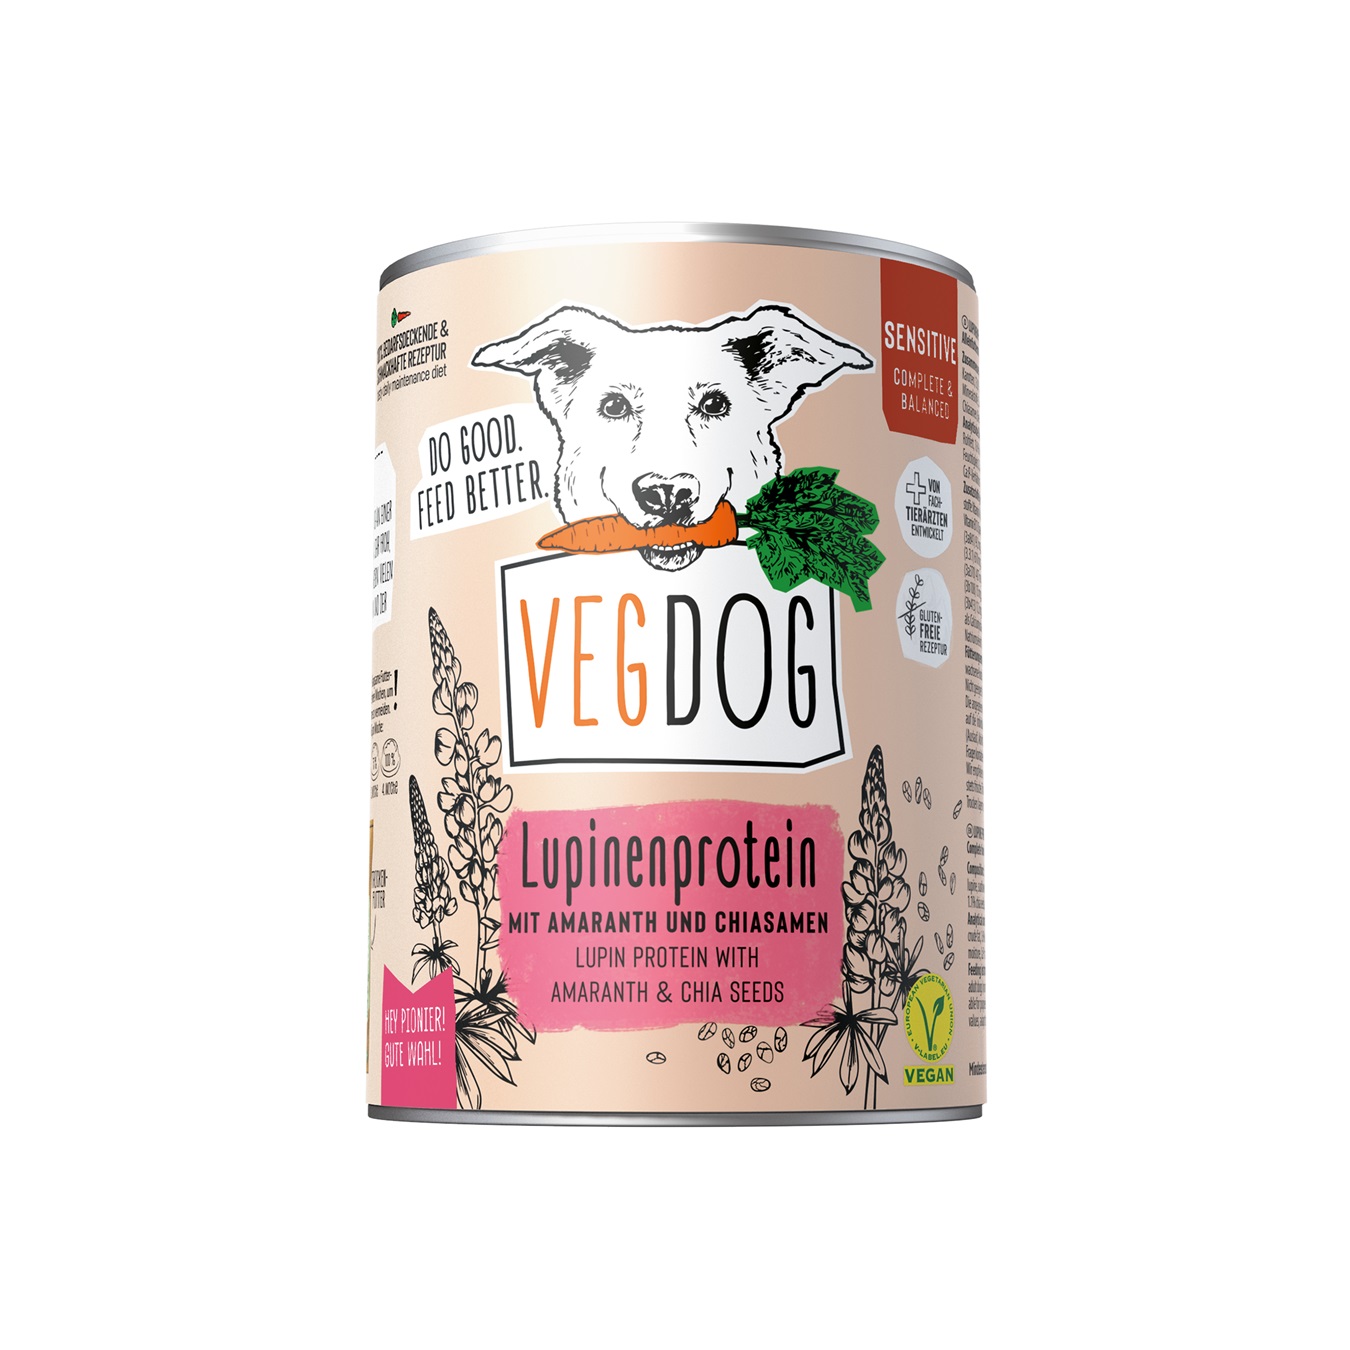 Hunde Alleinfutter Sensitive Lupinenprotein, nicht Bio, vegan 400g VEGDOG - Bild 1